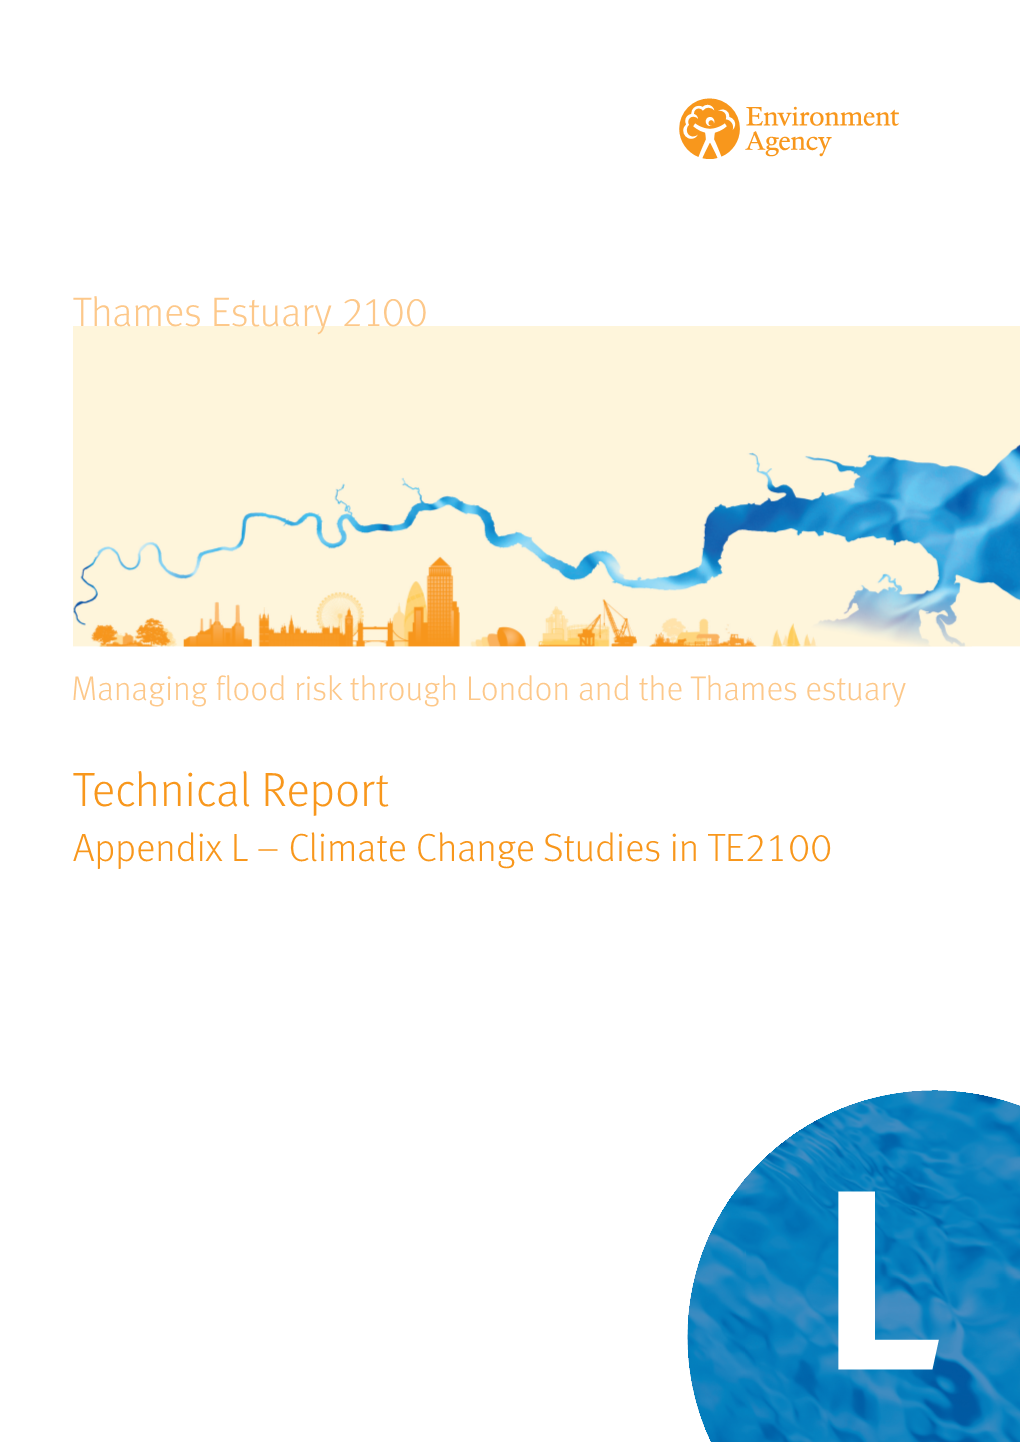 Technical Report Appendix L – Climate Change Studies in TE2100